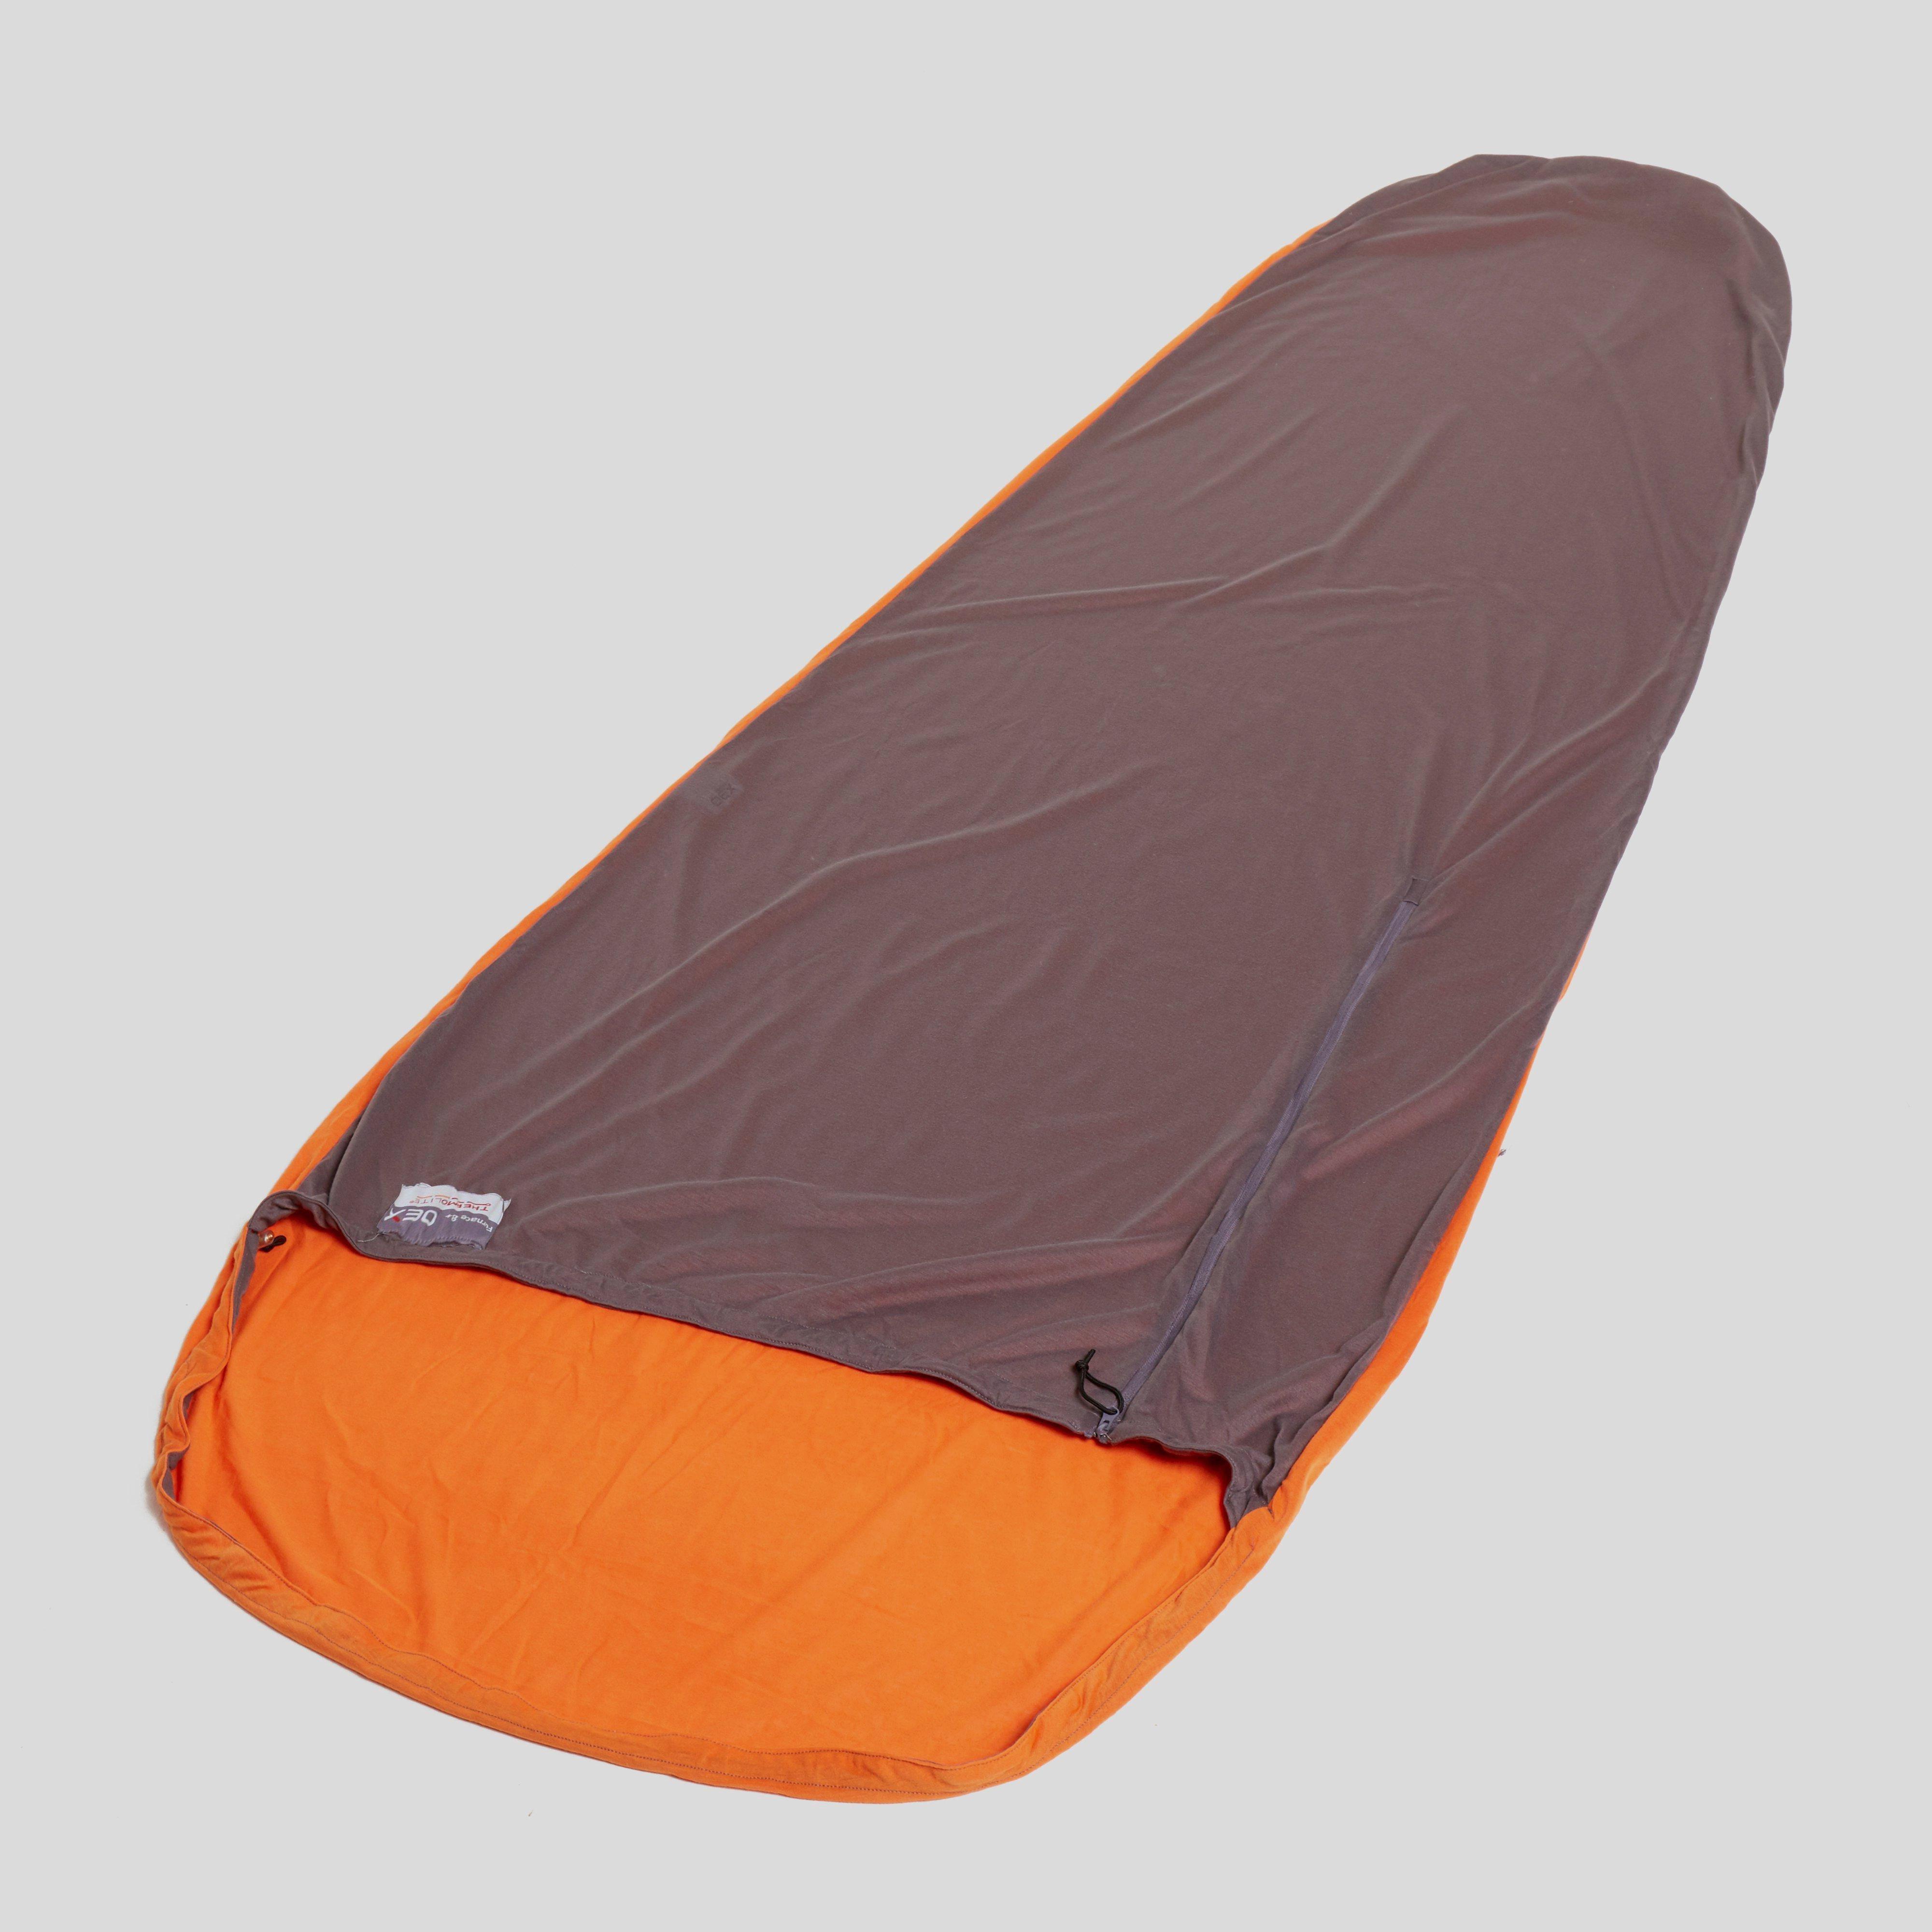 Photos - Sleeping Bag OEX Furnace 8+ Liner, Orange 